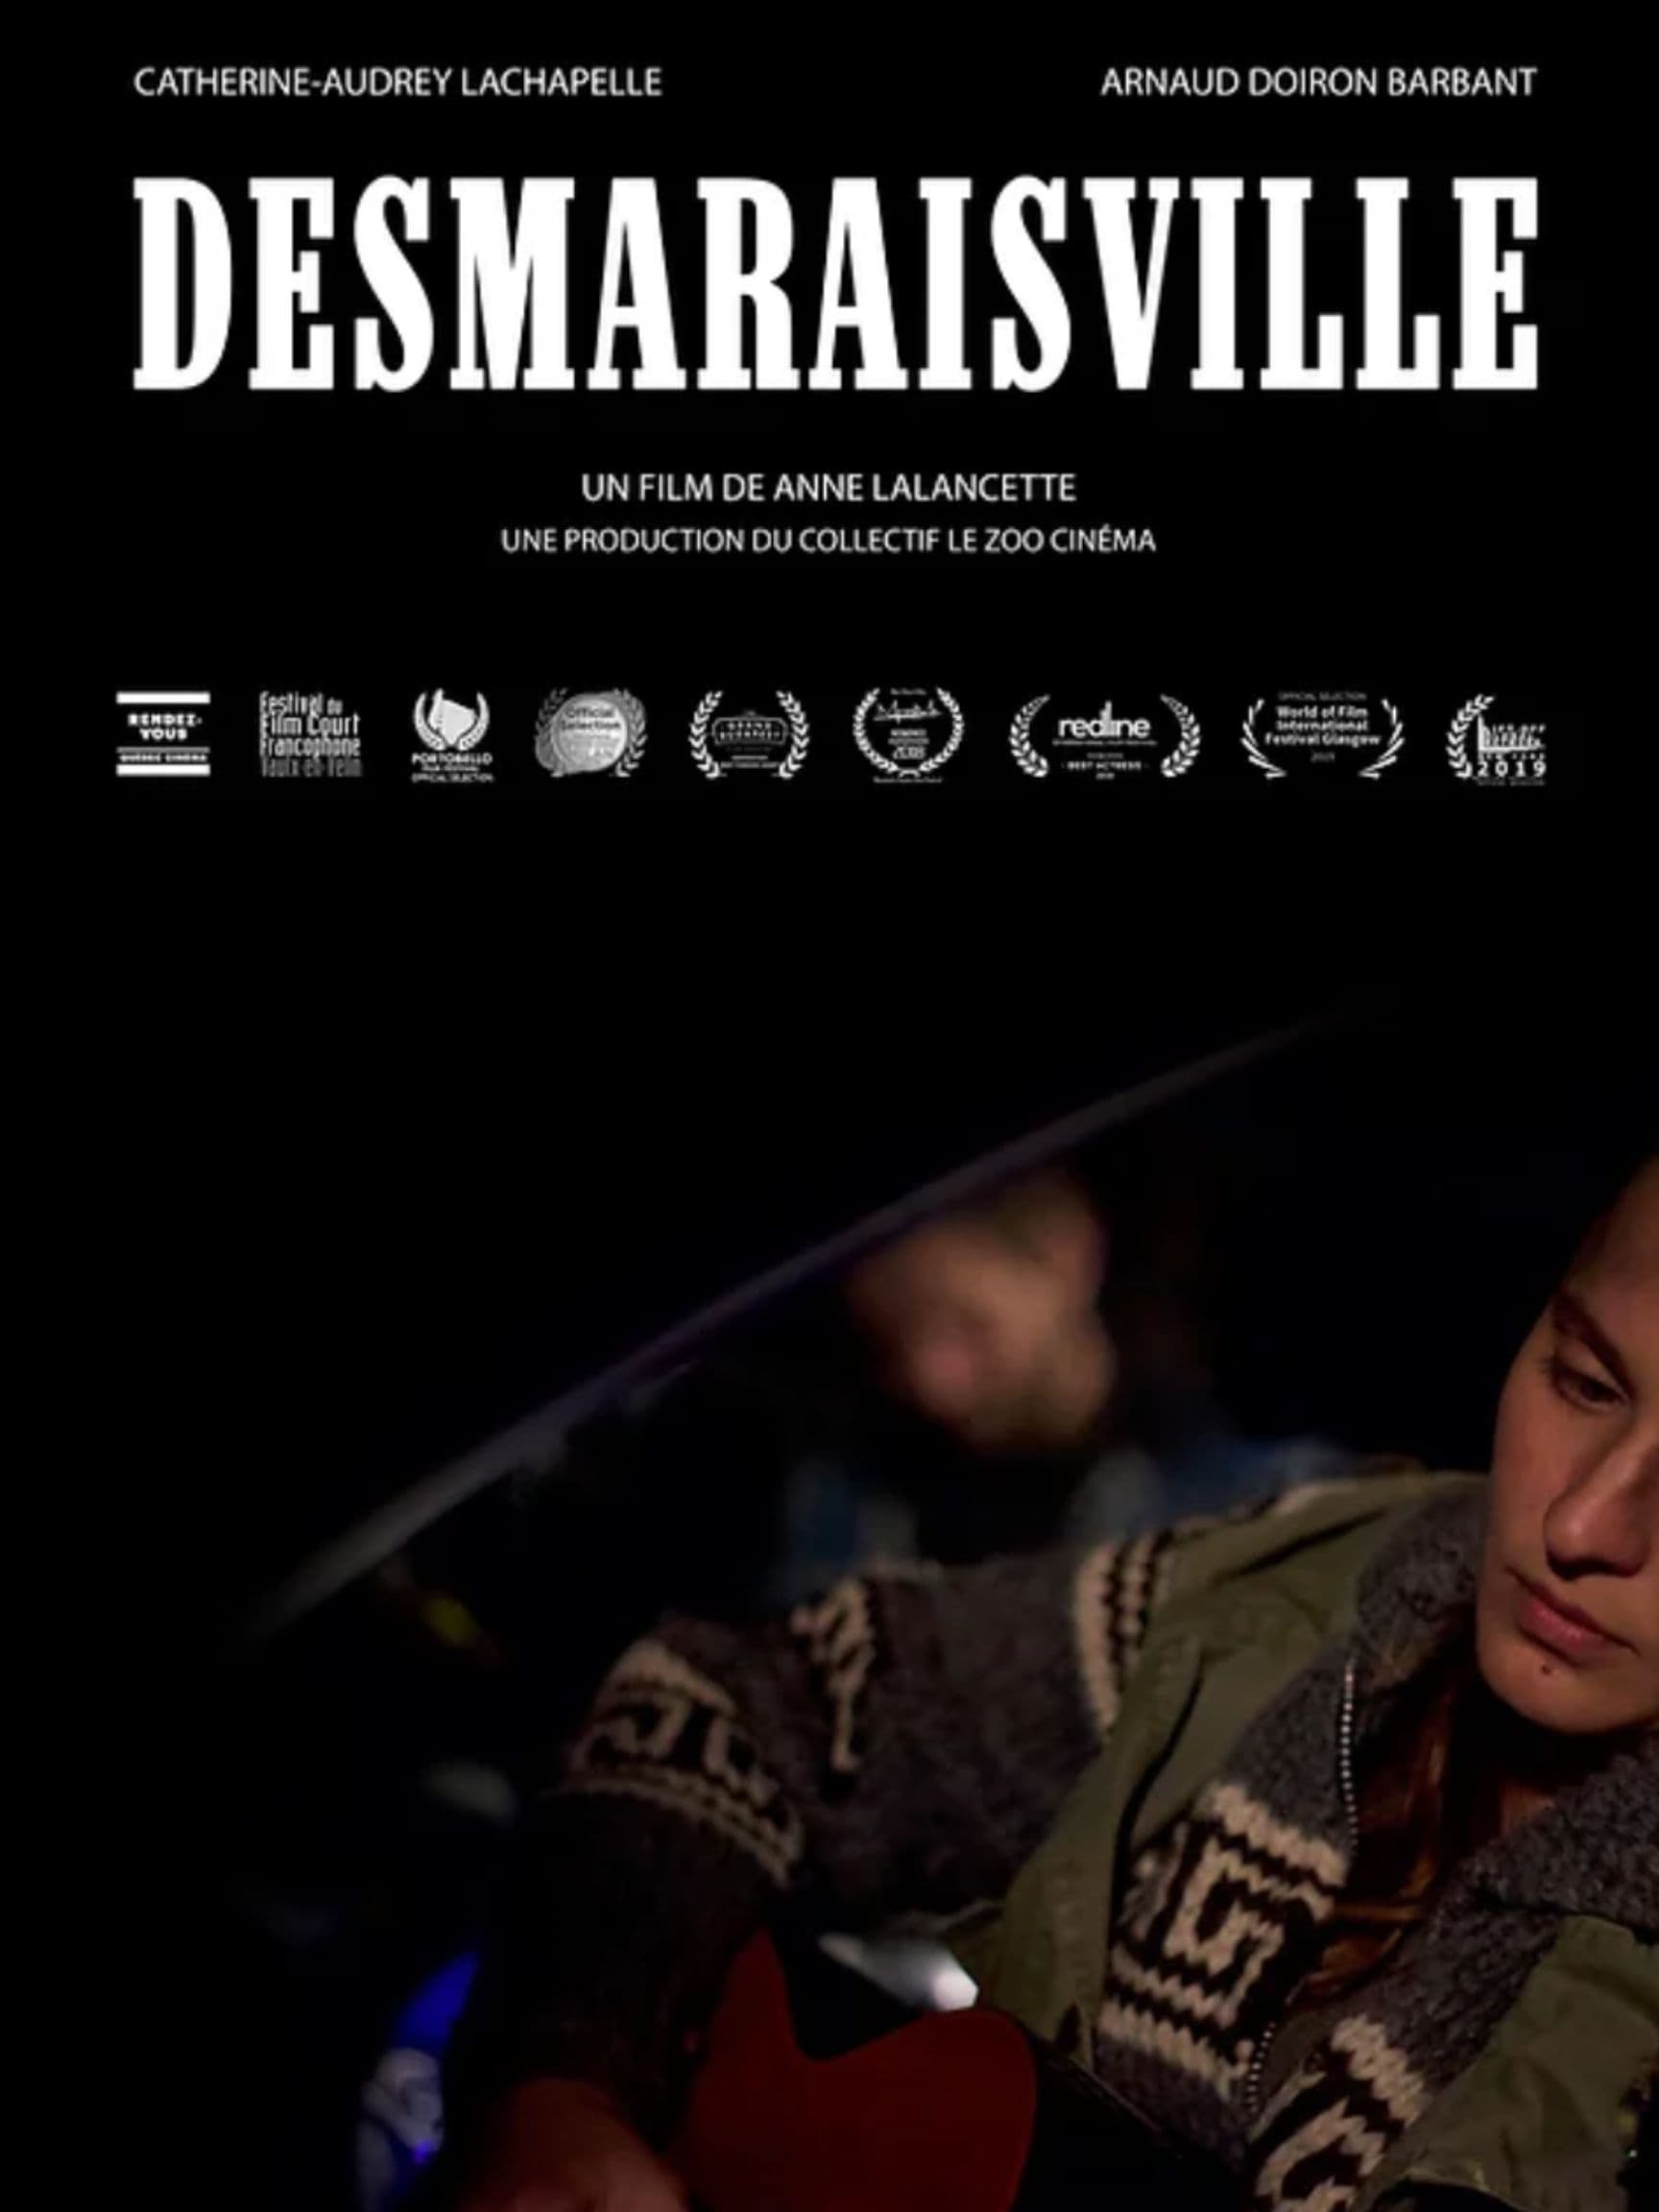 Desmaraisville